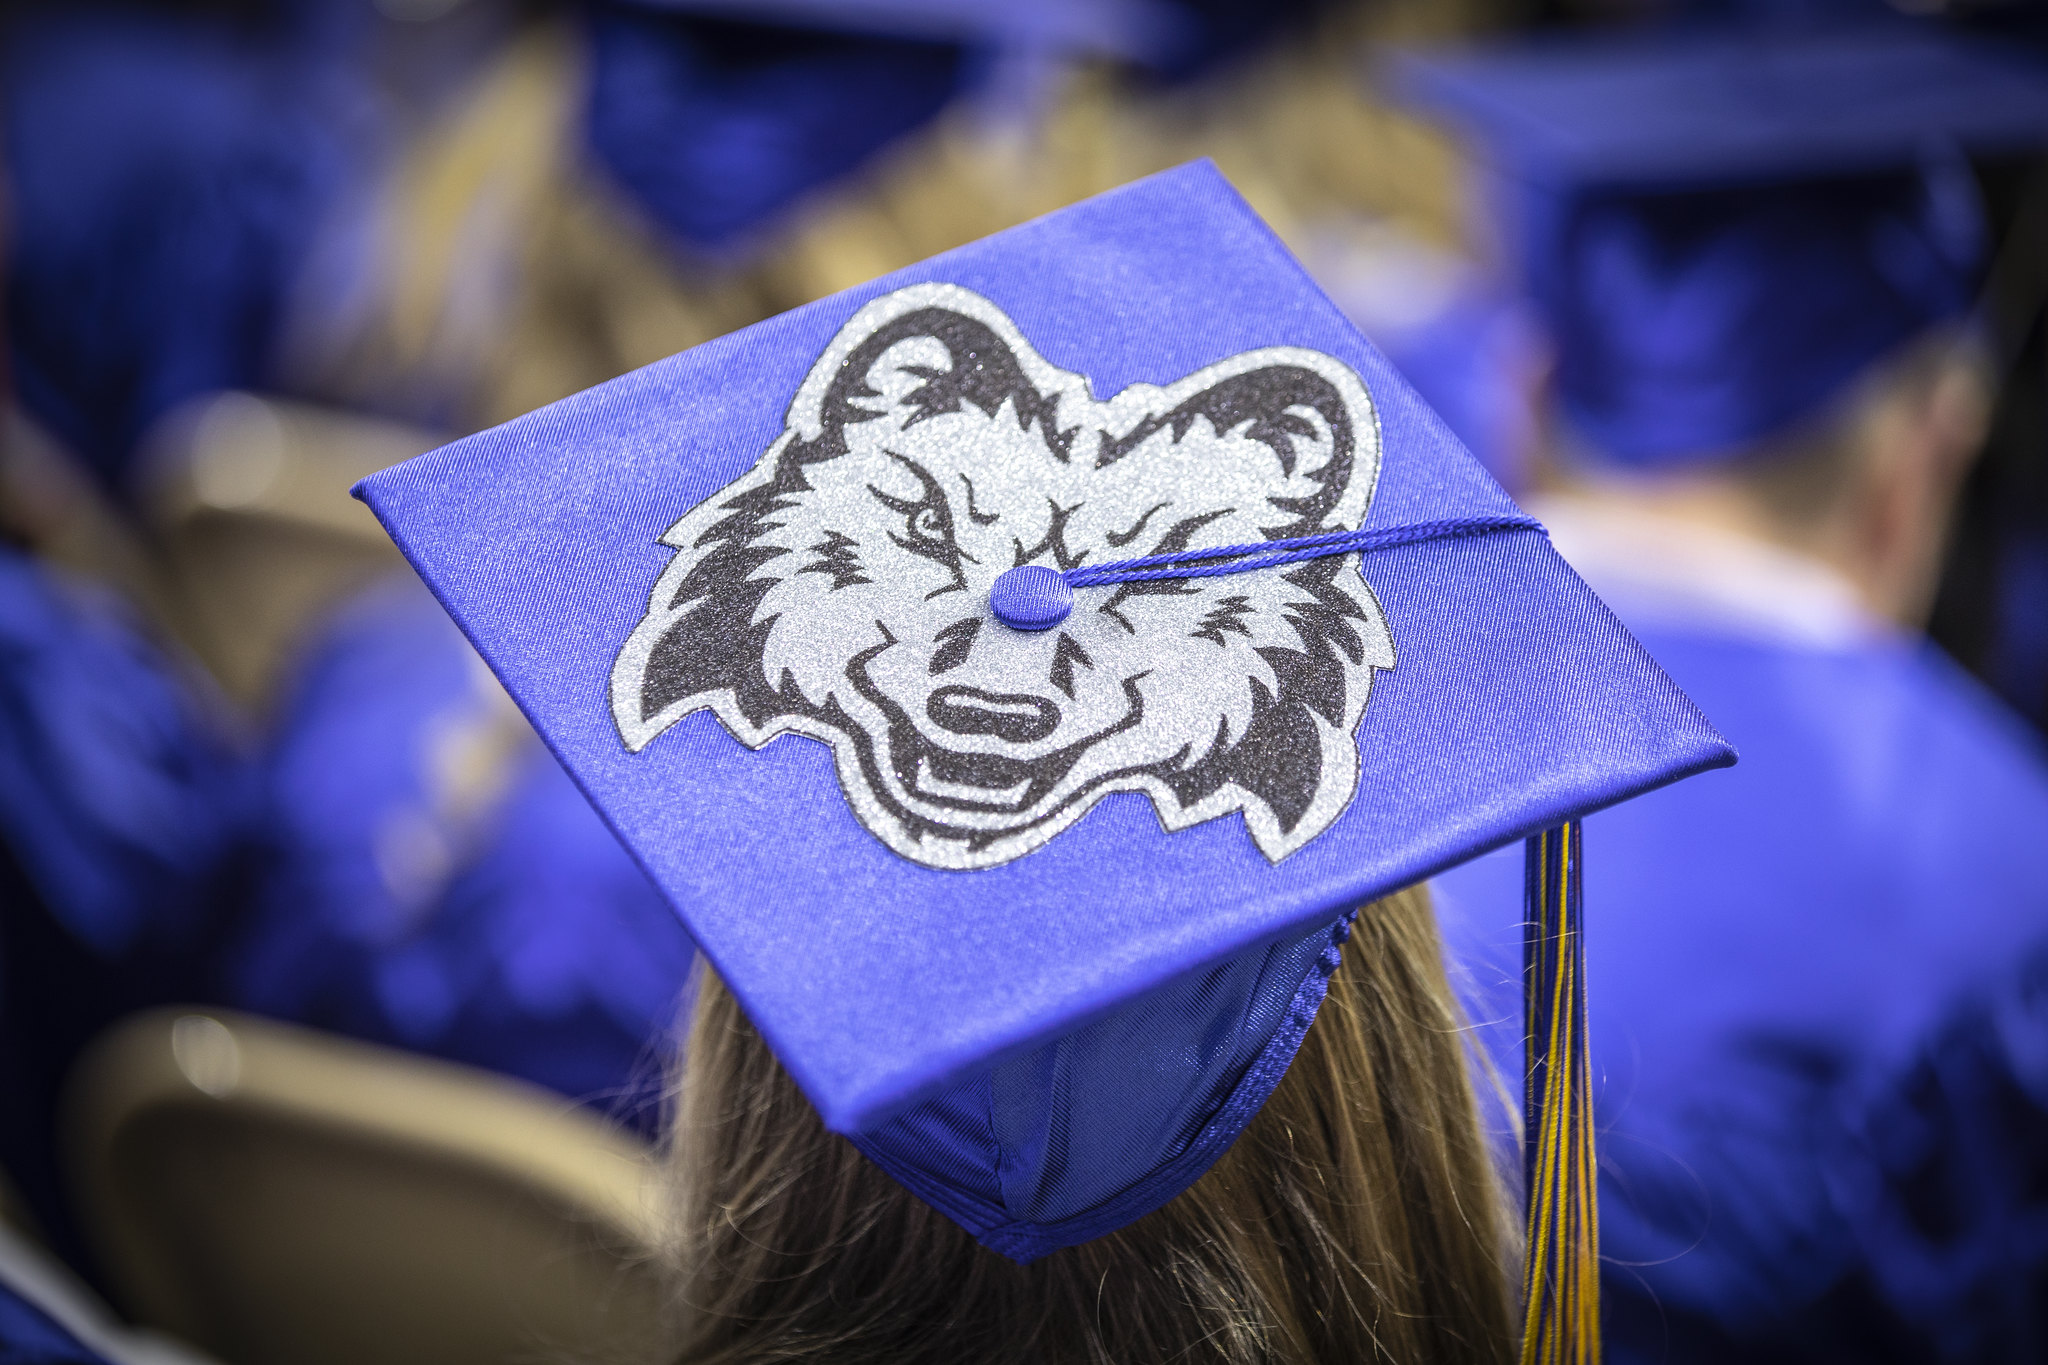 Graduation speaker looks back on time as student Madison College